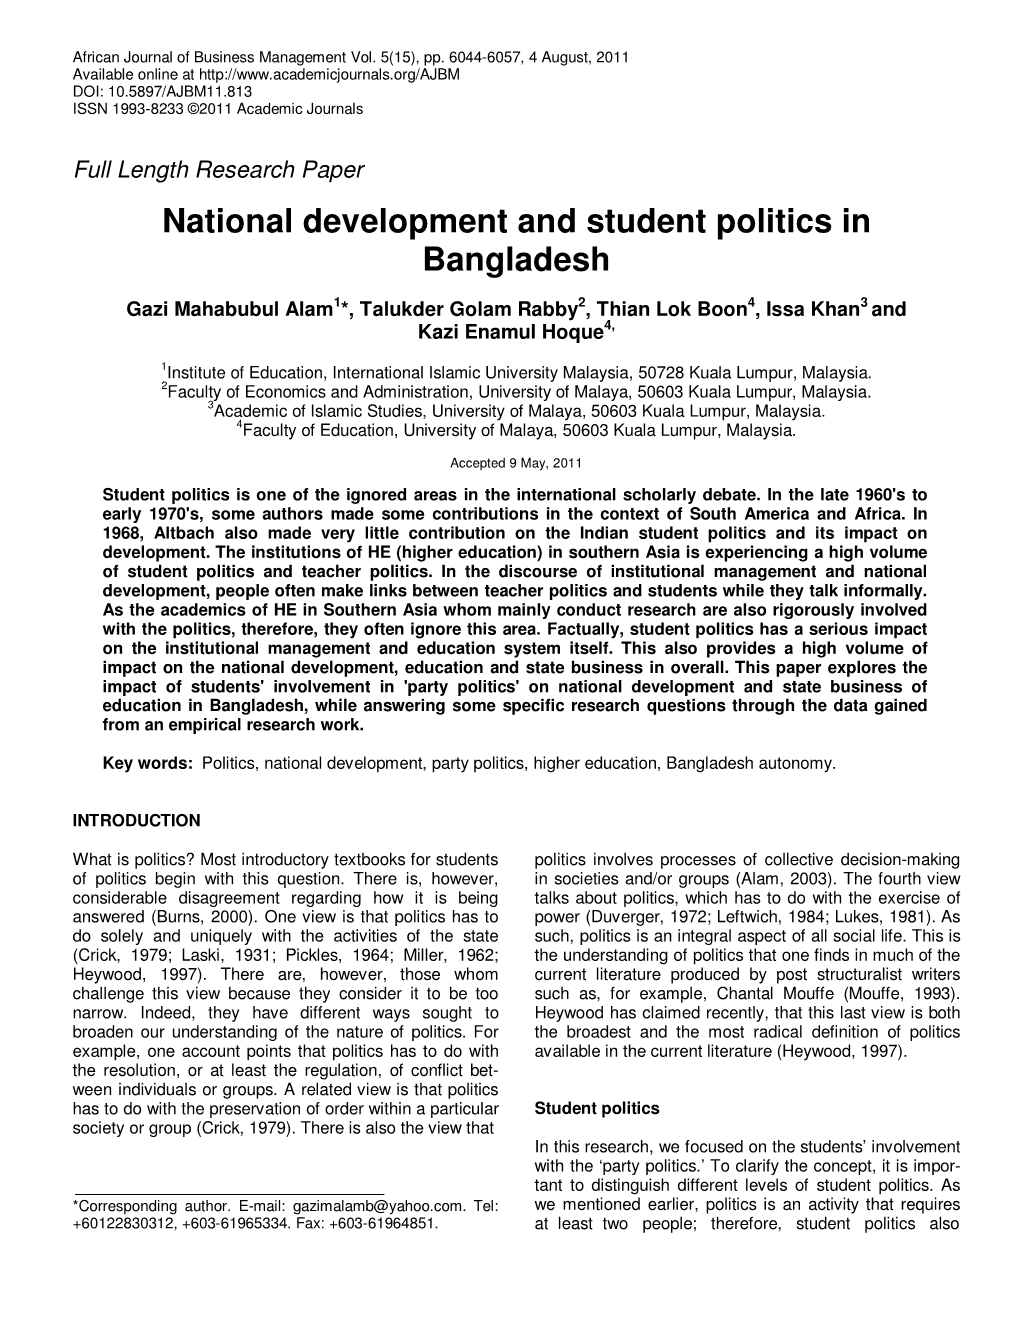 National Development and Student Politics in Bangladesh